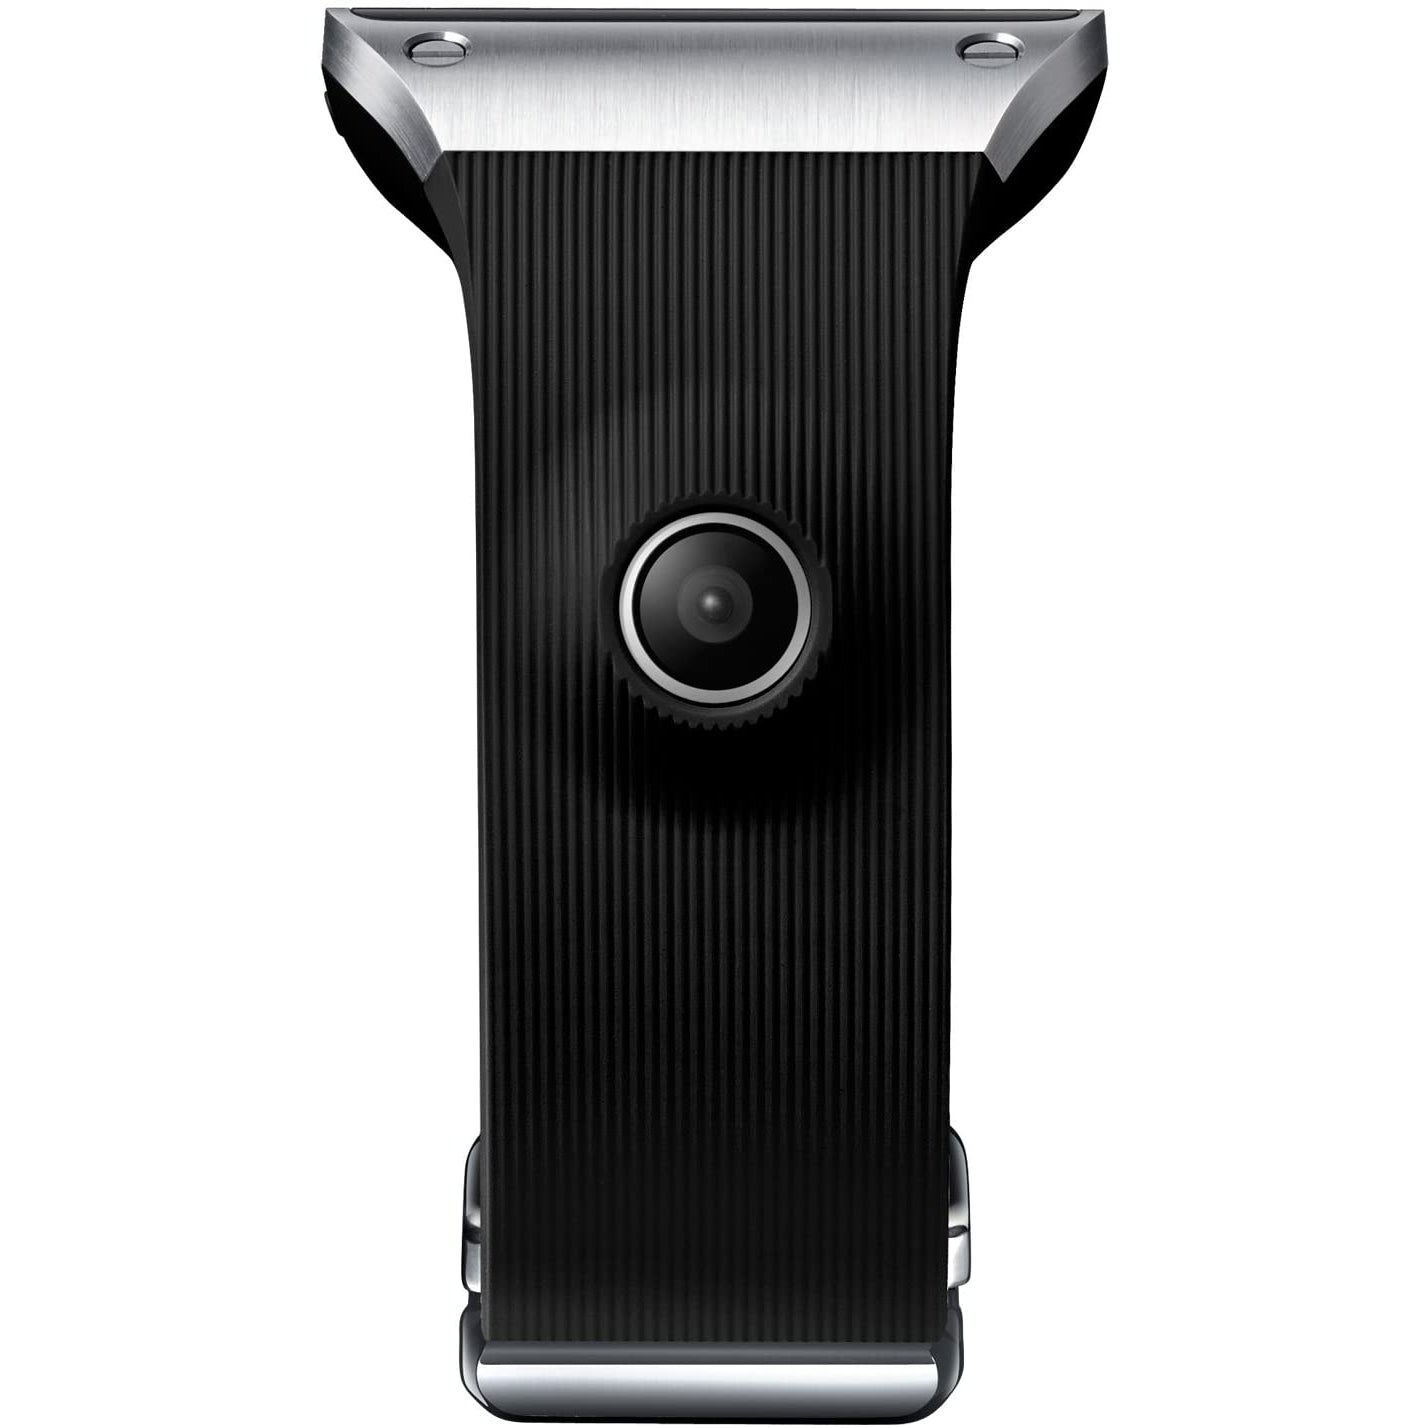 Samsung Galaxy Gear SM-V700 Bluetooth Smart Watch 1.63" sAMOLED - Jet Black